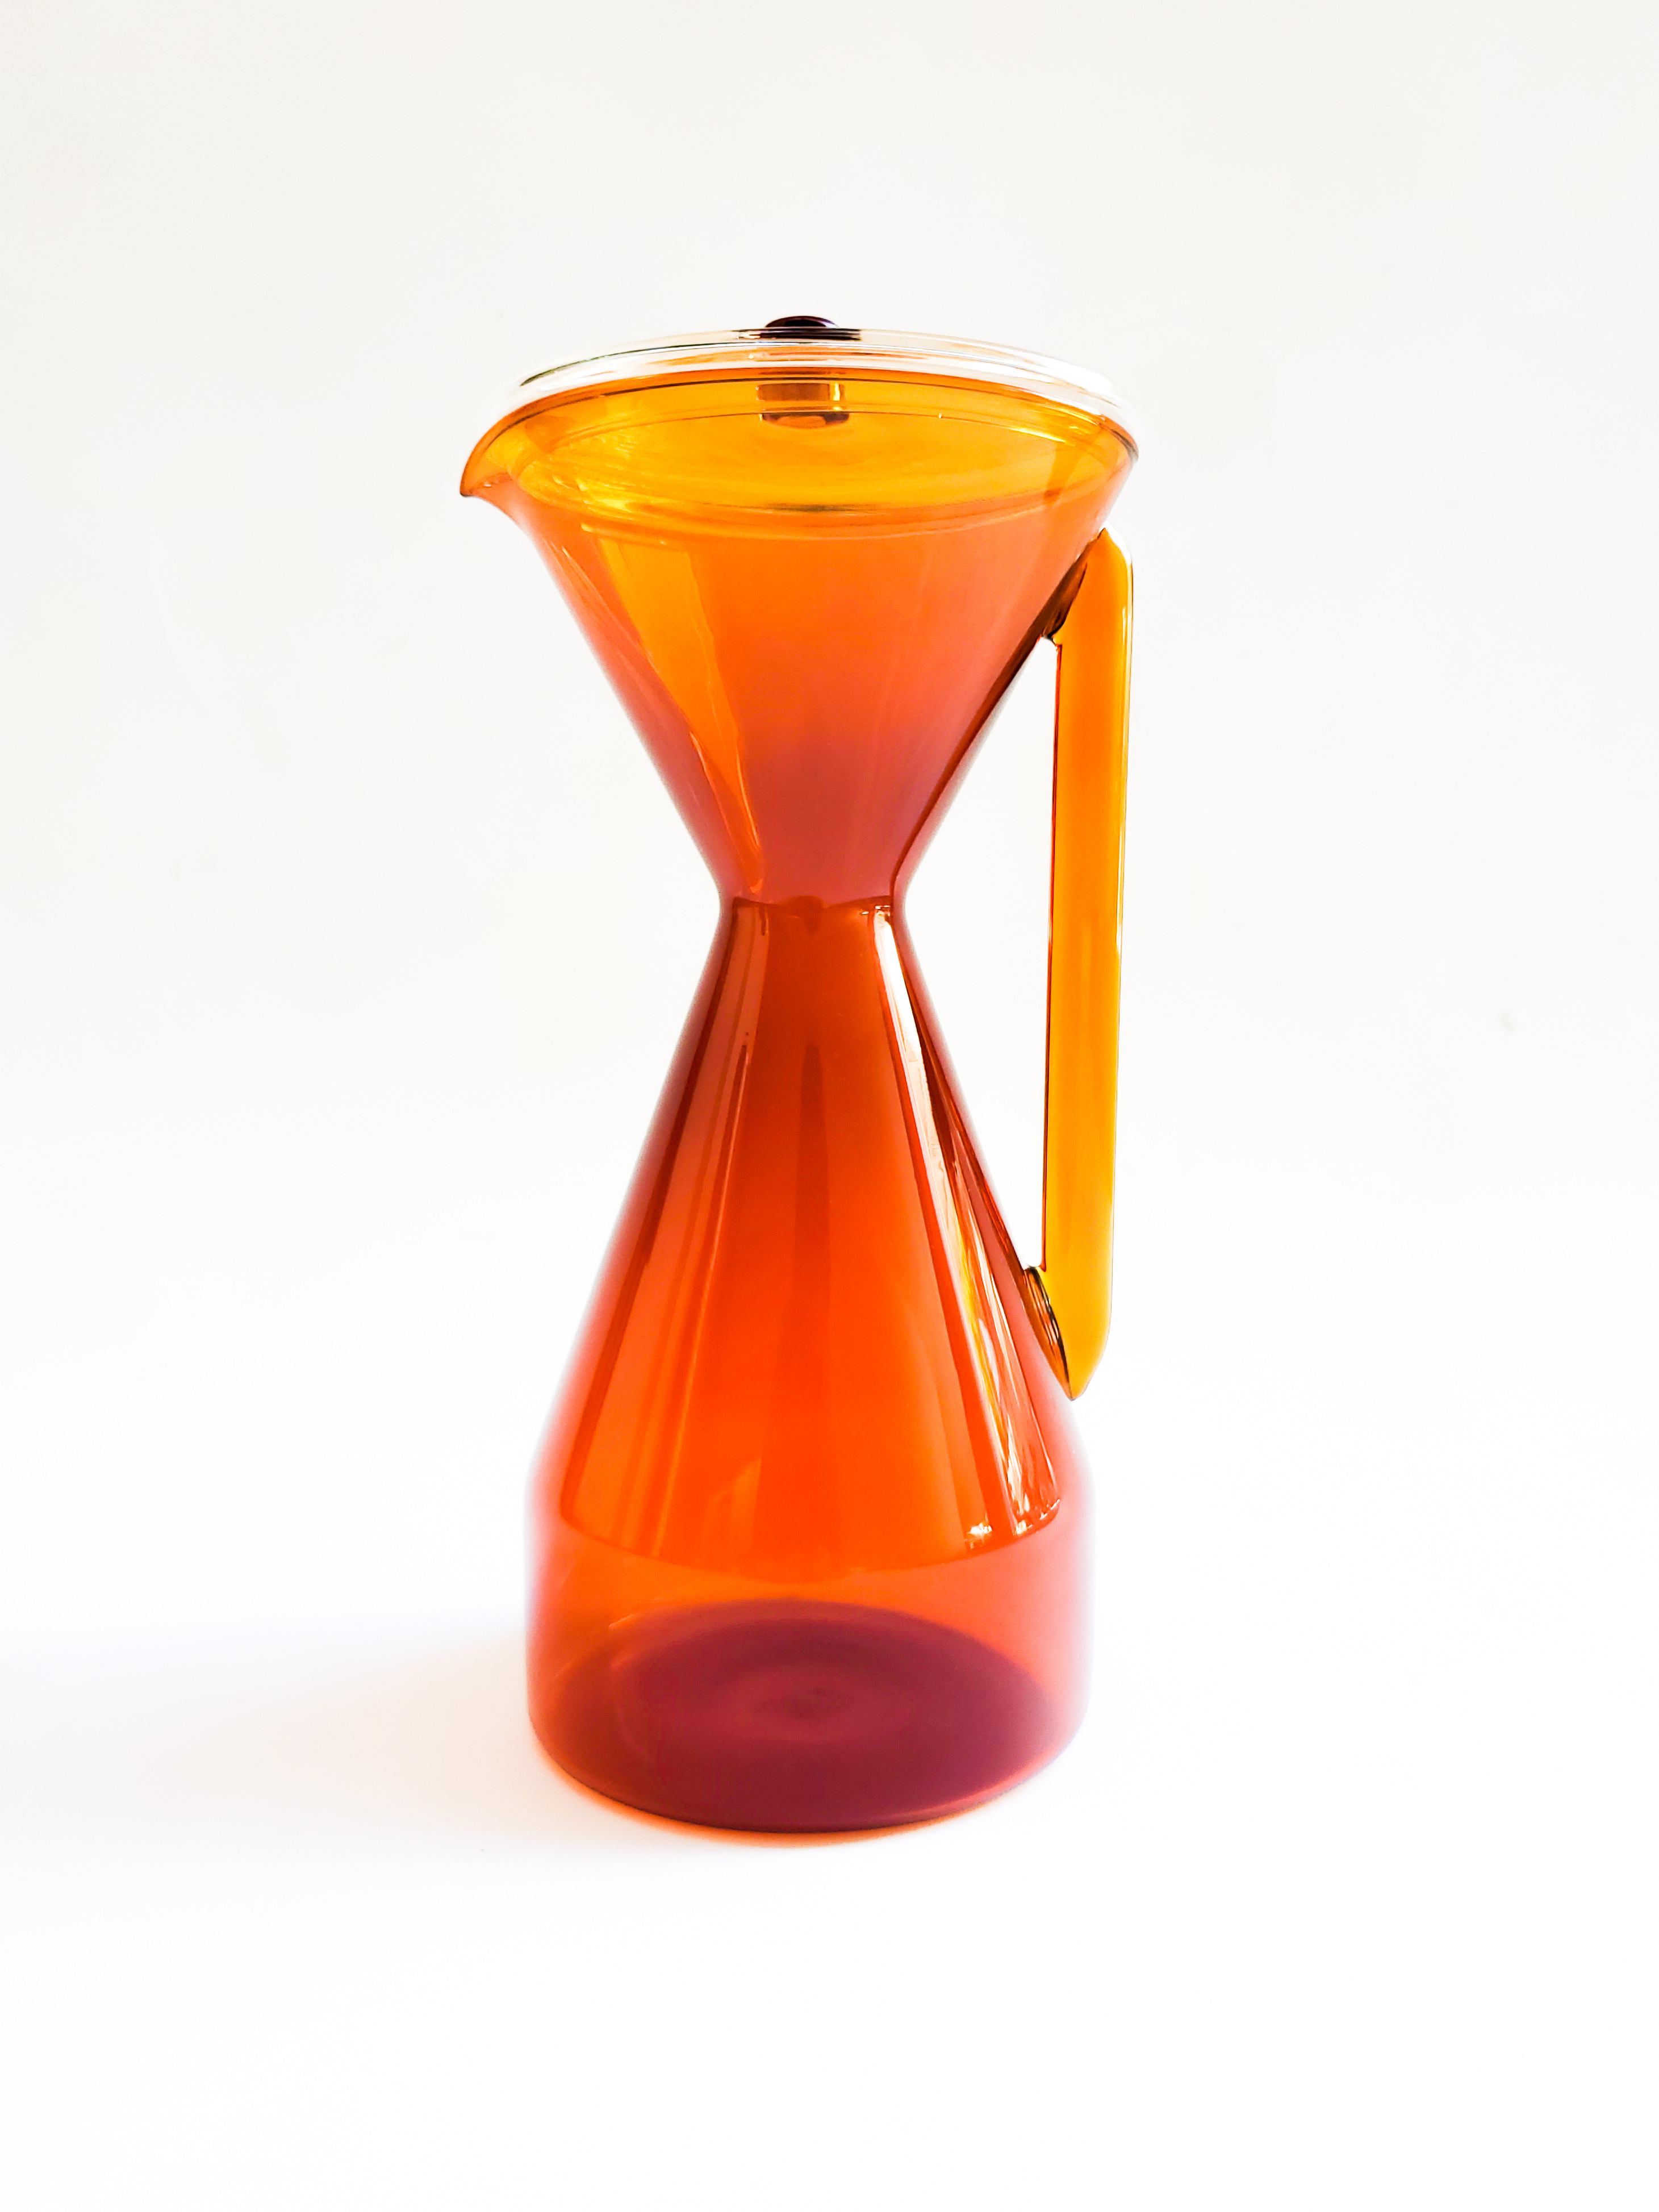 Orange, glass, tall, hourglass-shaped carafe. 